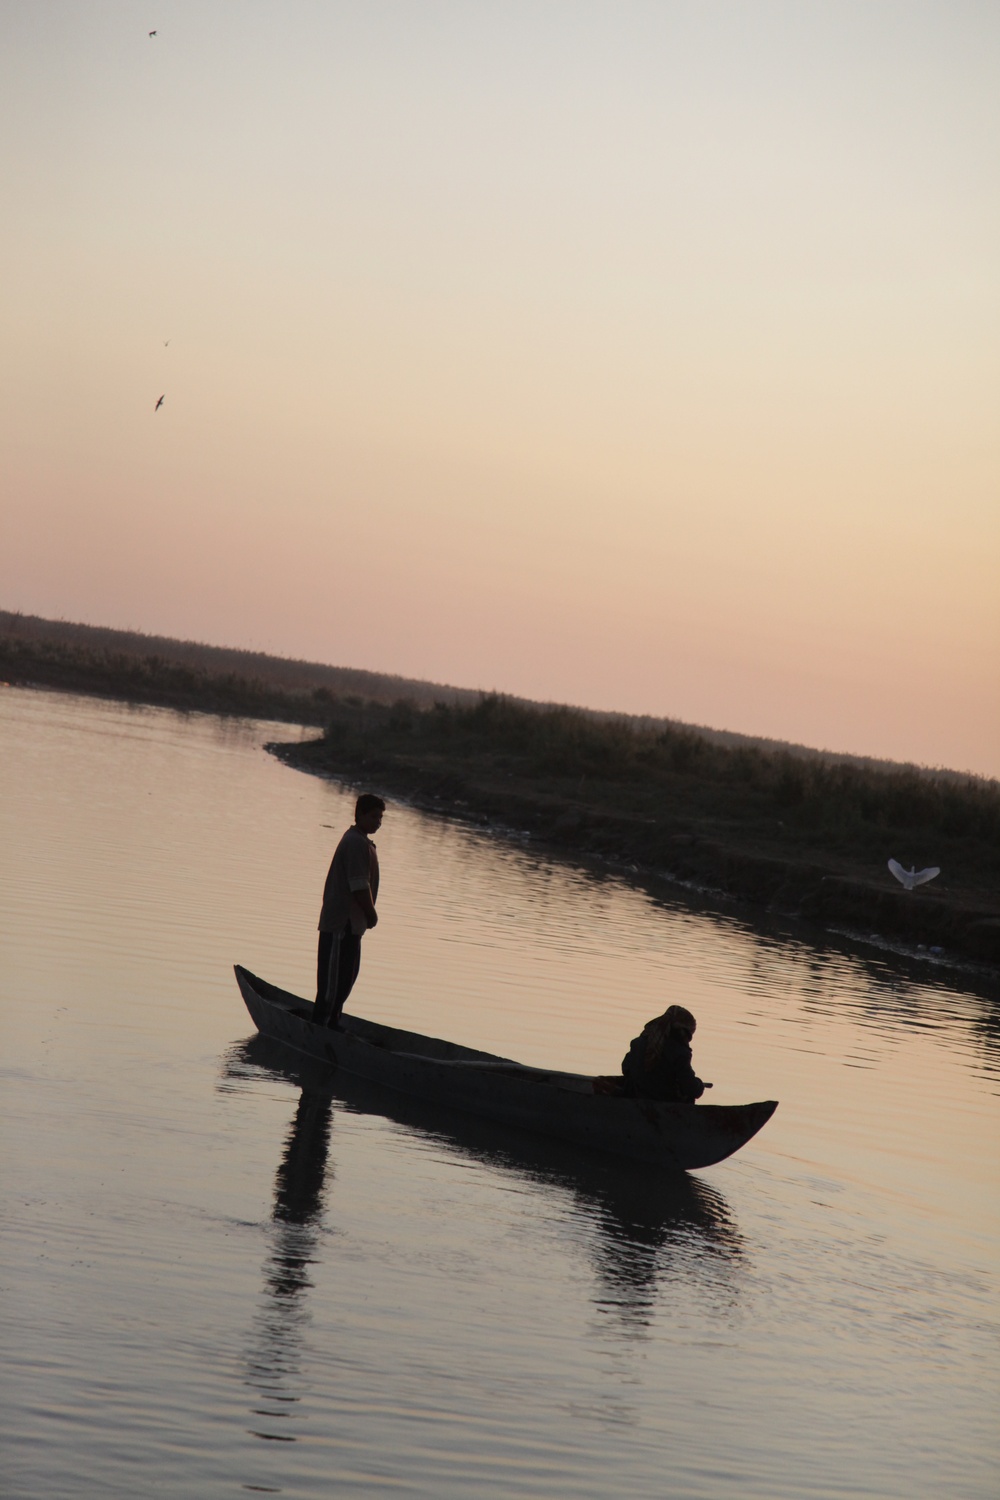 Iraqi fishermen